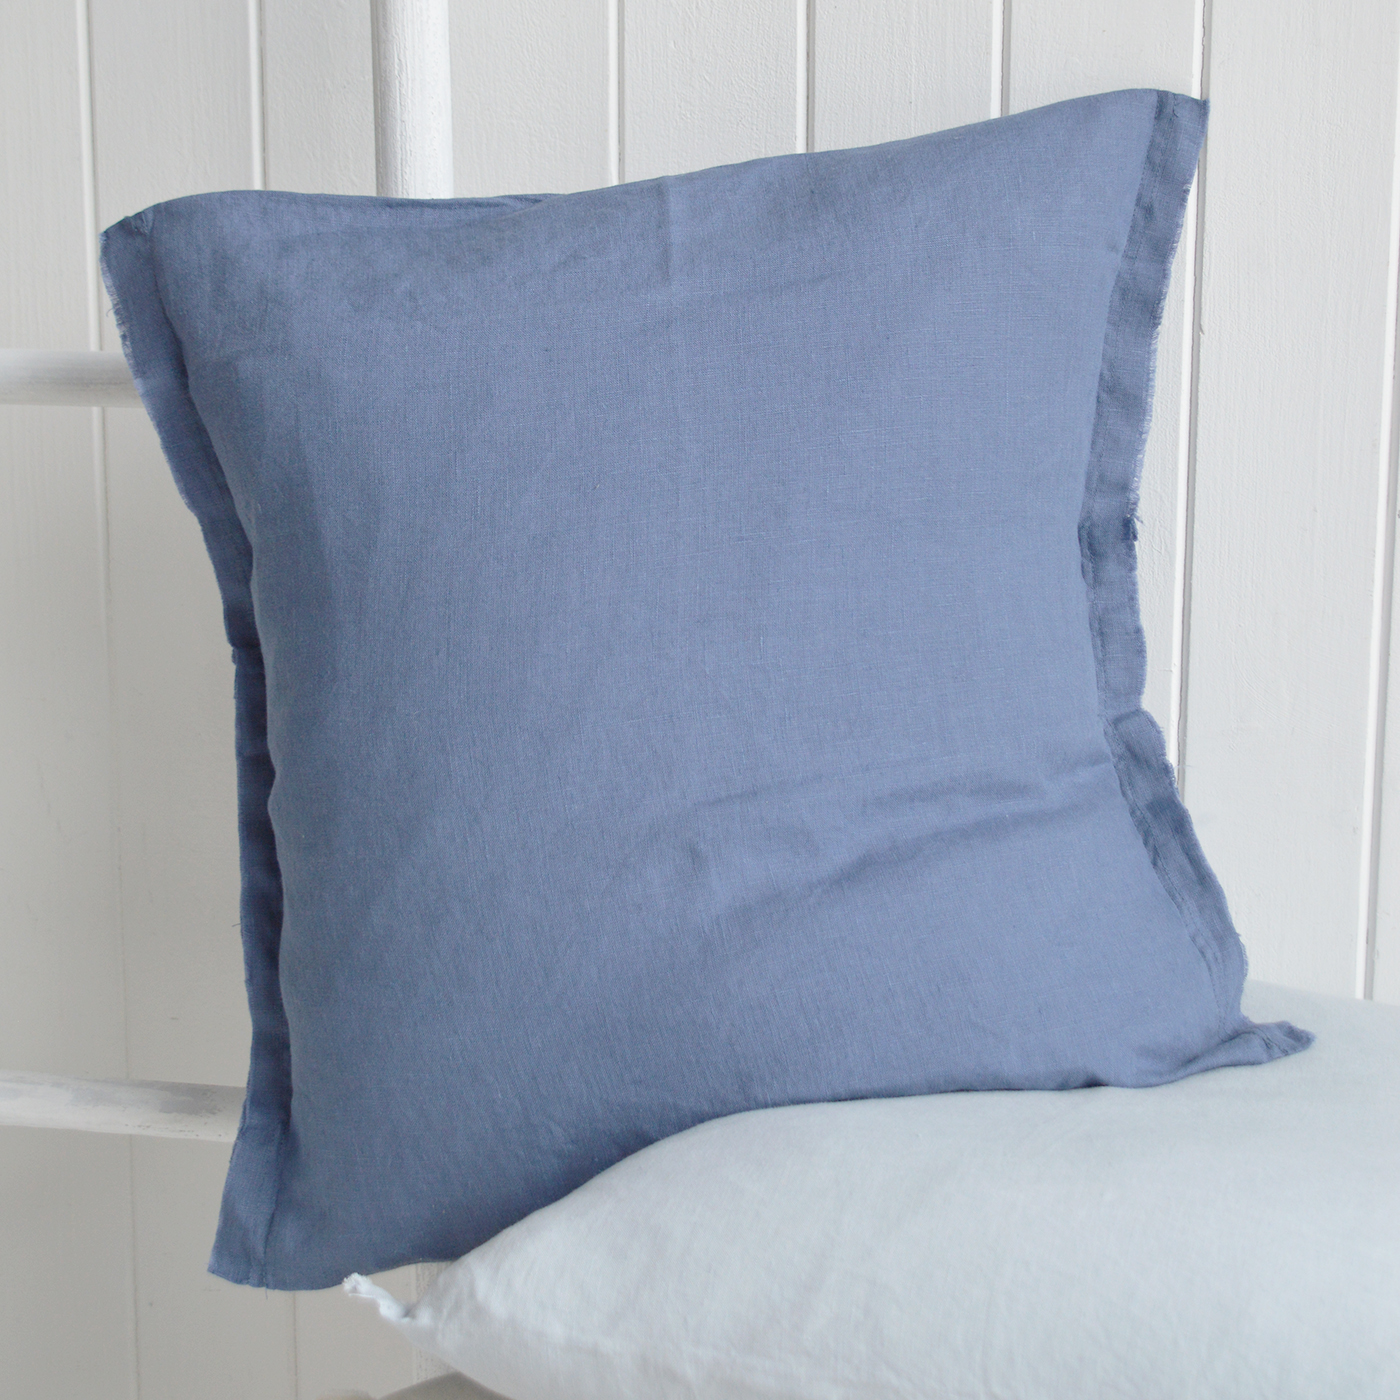  New England cushions and soft furnishings. Hamilton 100% Linen Cushion Covers for coastal, beach house and modern farmhouse interiors - navy